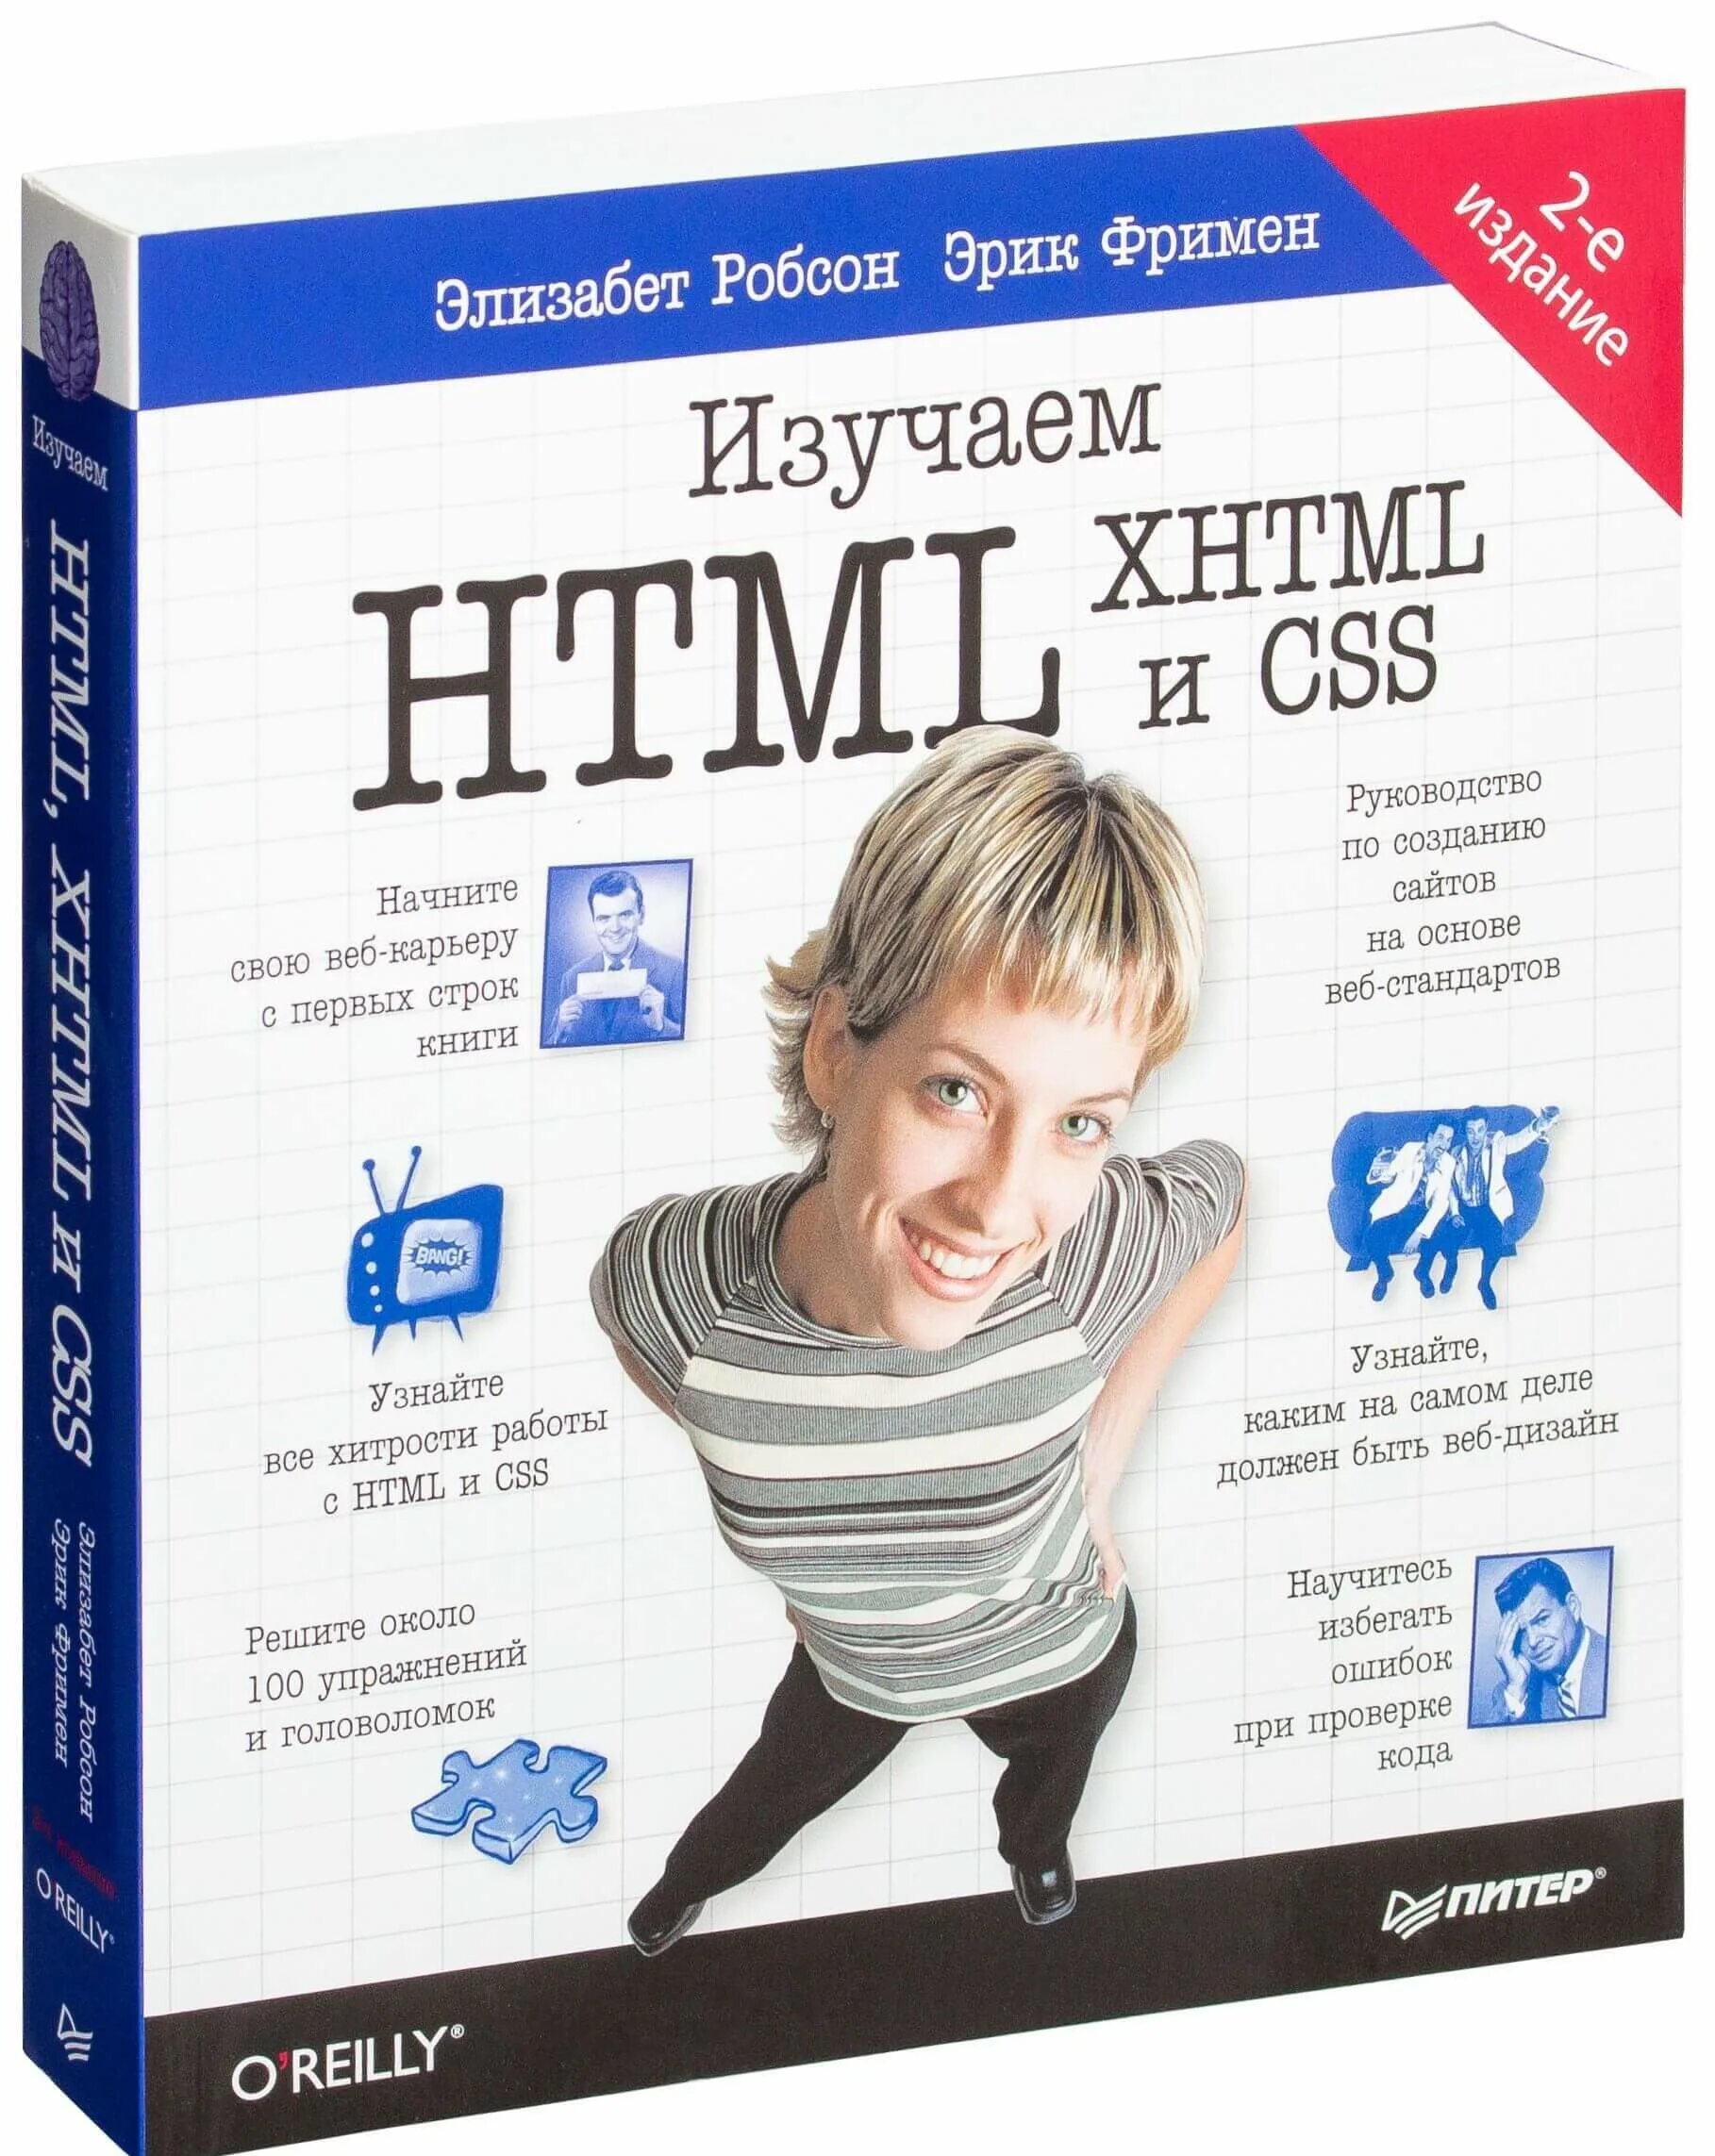 Ru pdf html. Робсон э., Фримен э. “изучаем html, XHTML И CSS”. Книги по html и CSS.